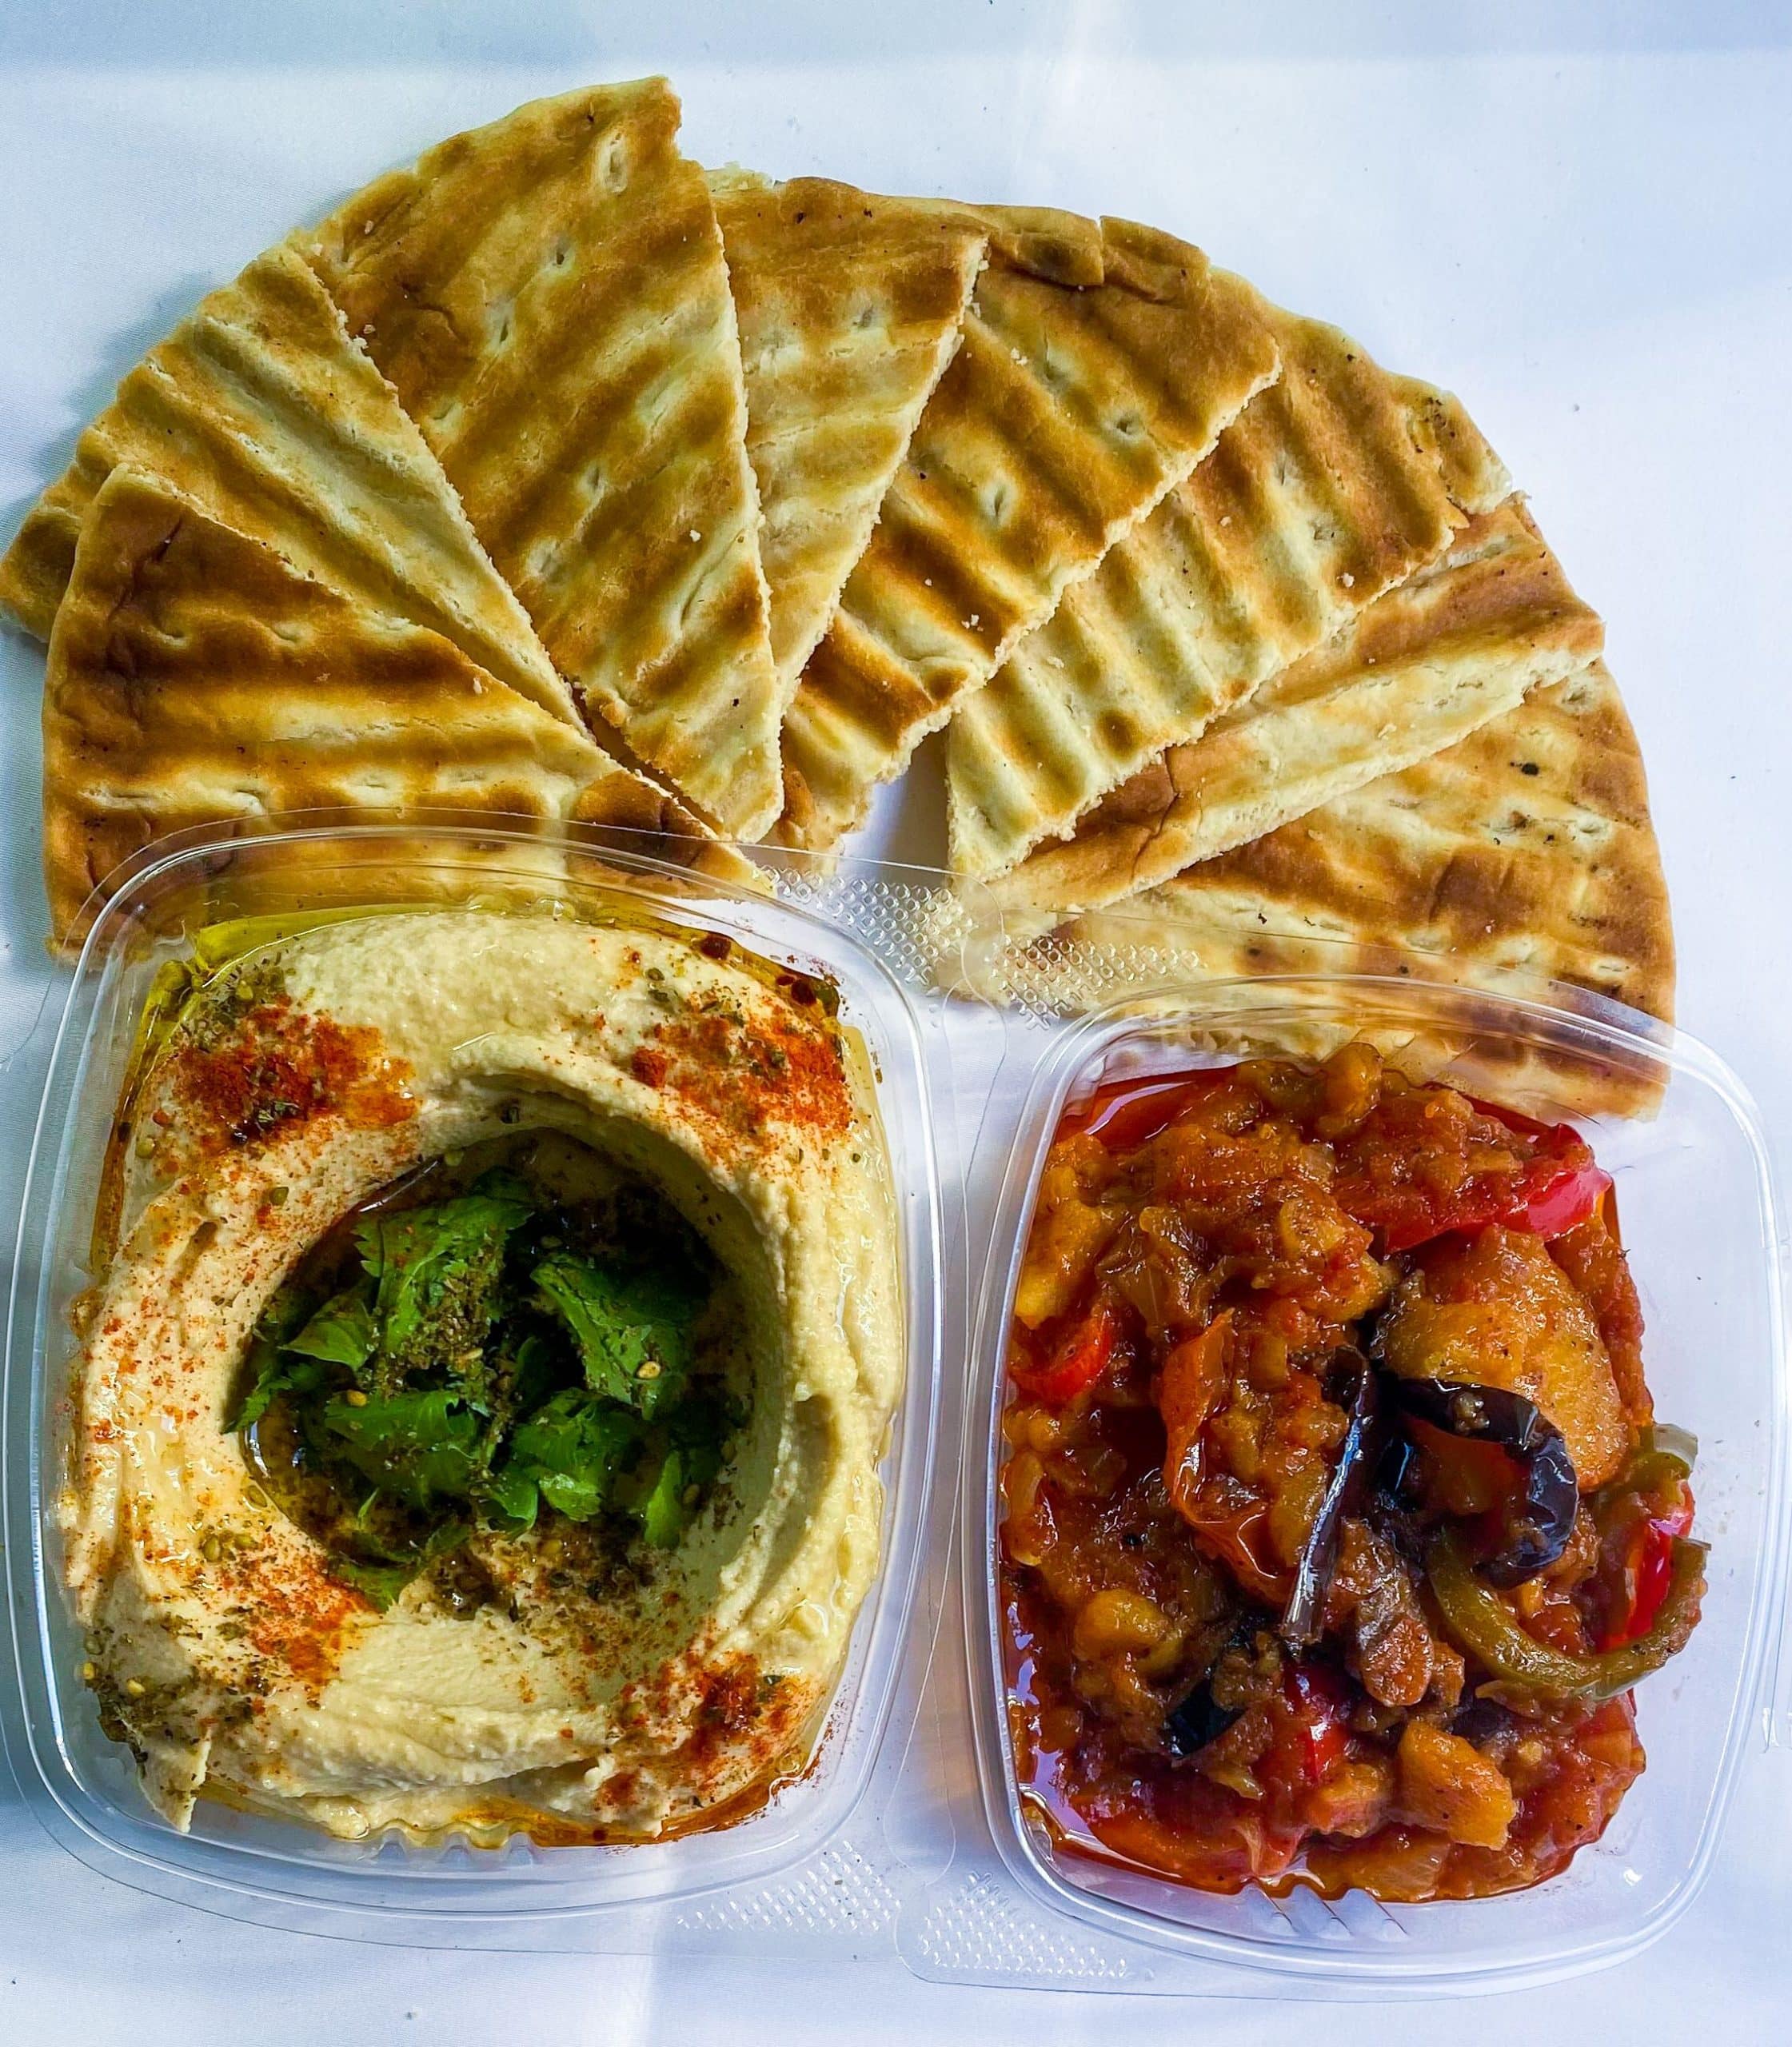 Hummus and Eggplant dip served with Pita